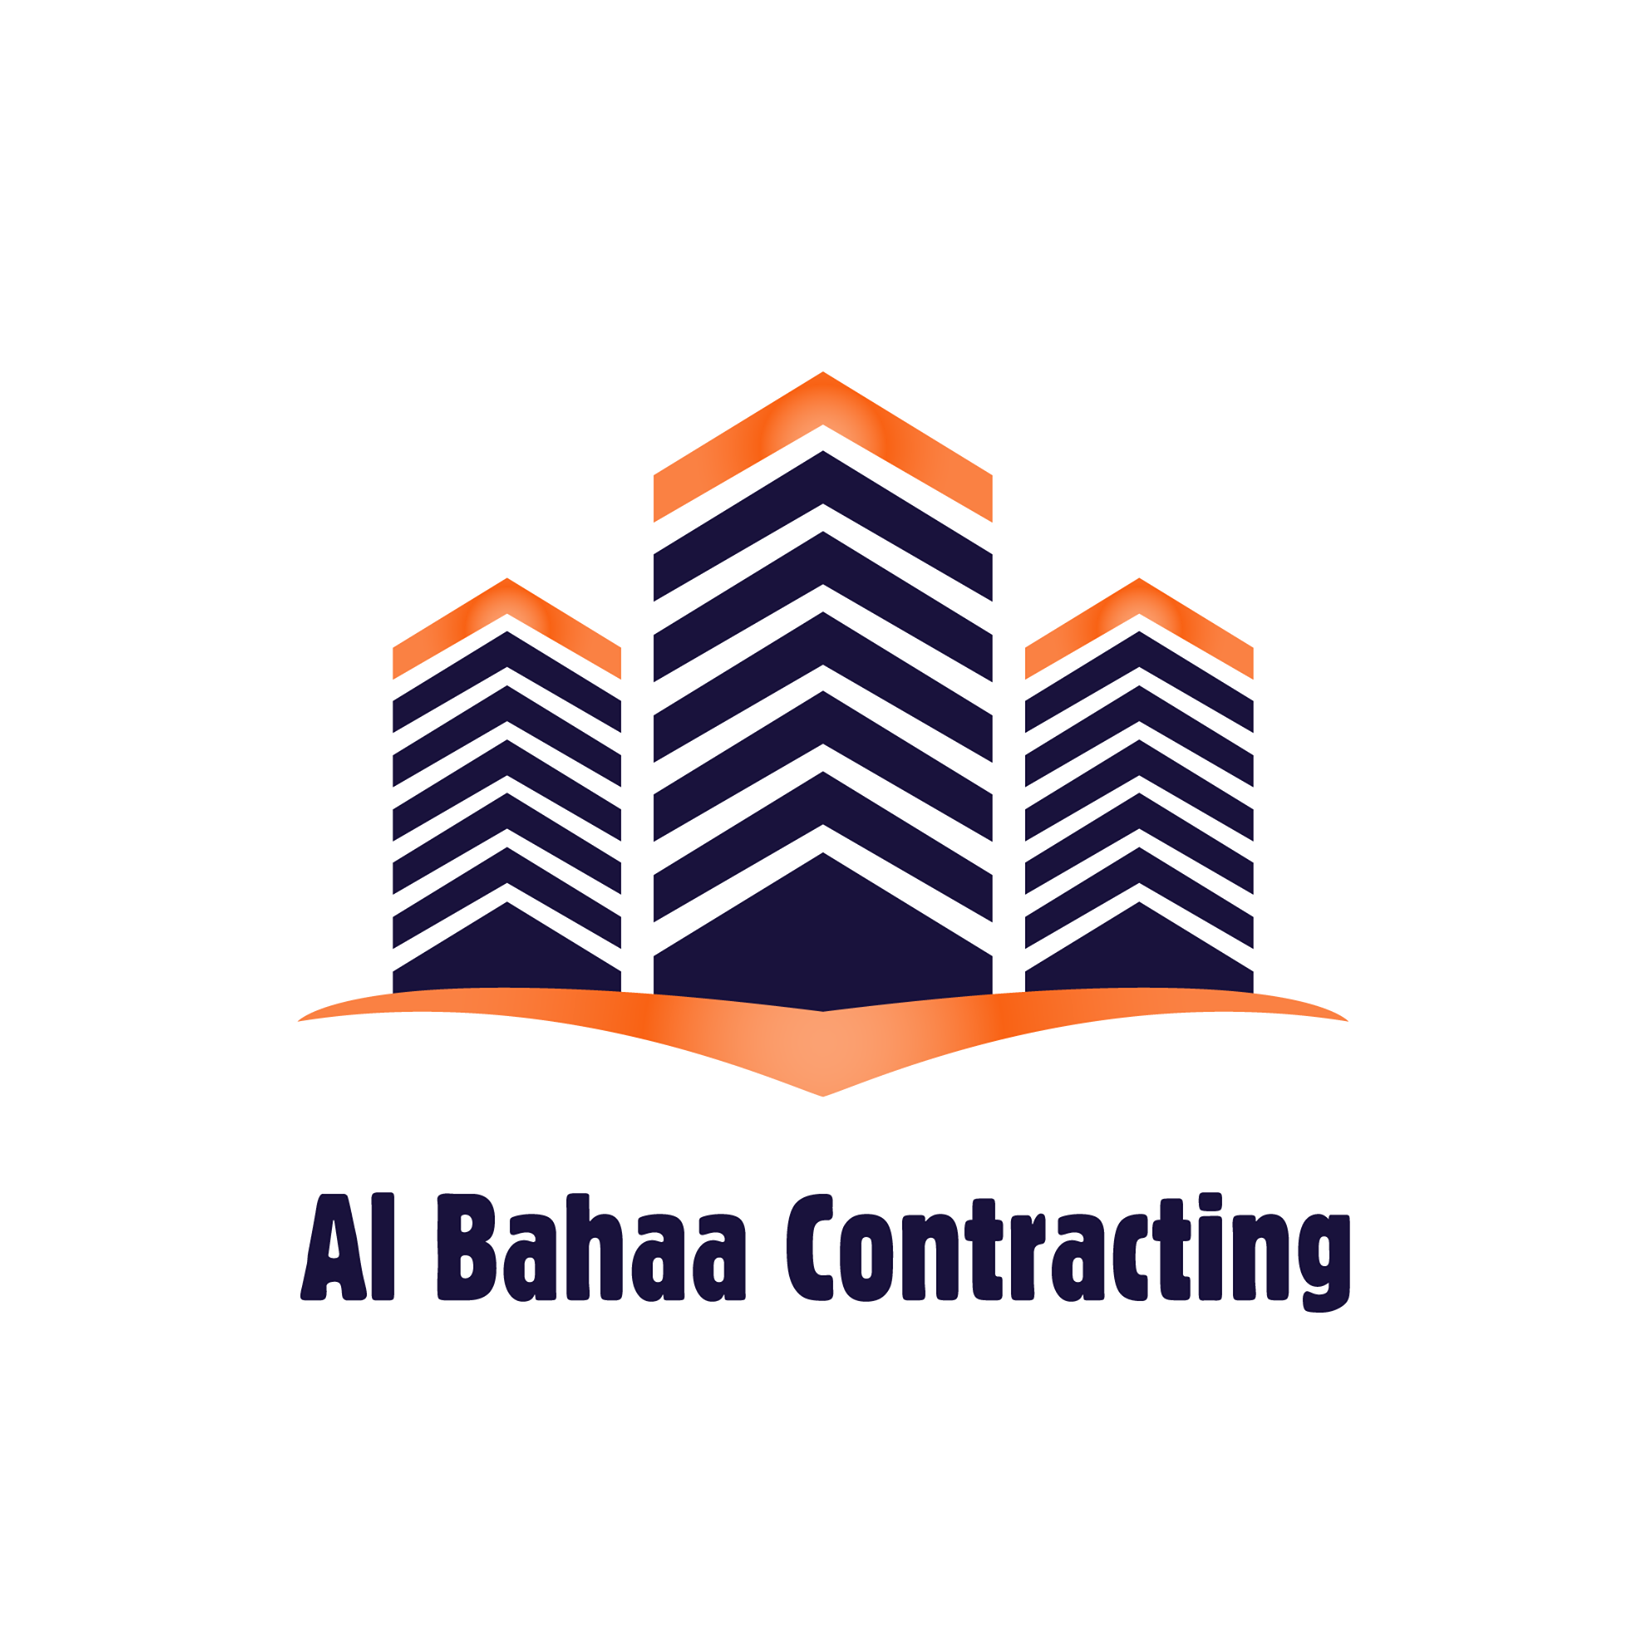 Al Bahaa Contracting Company